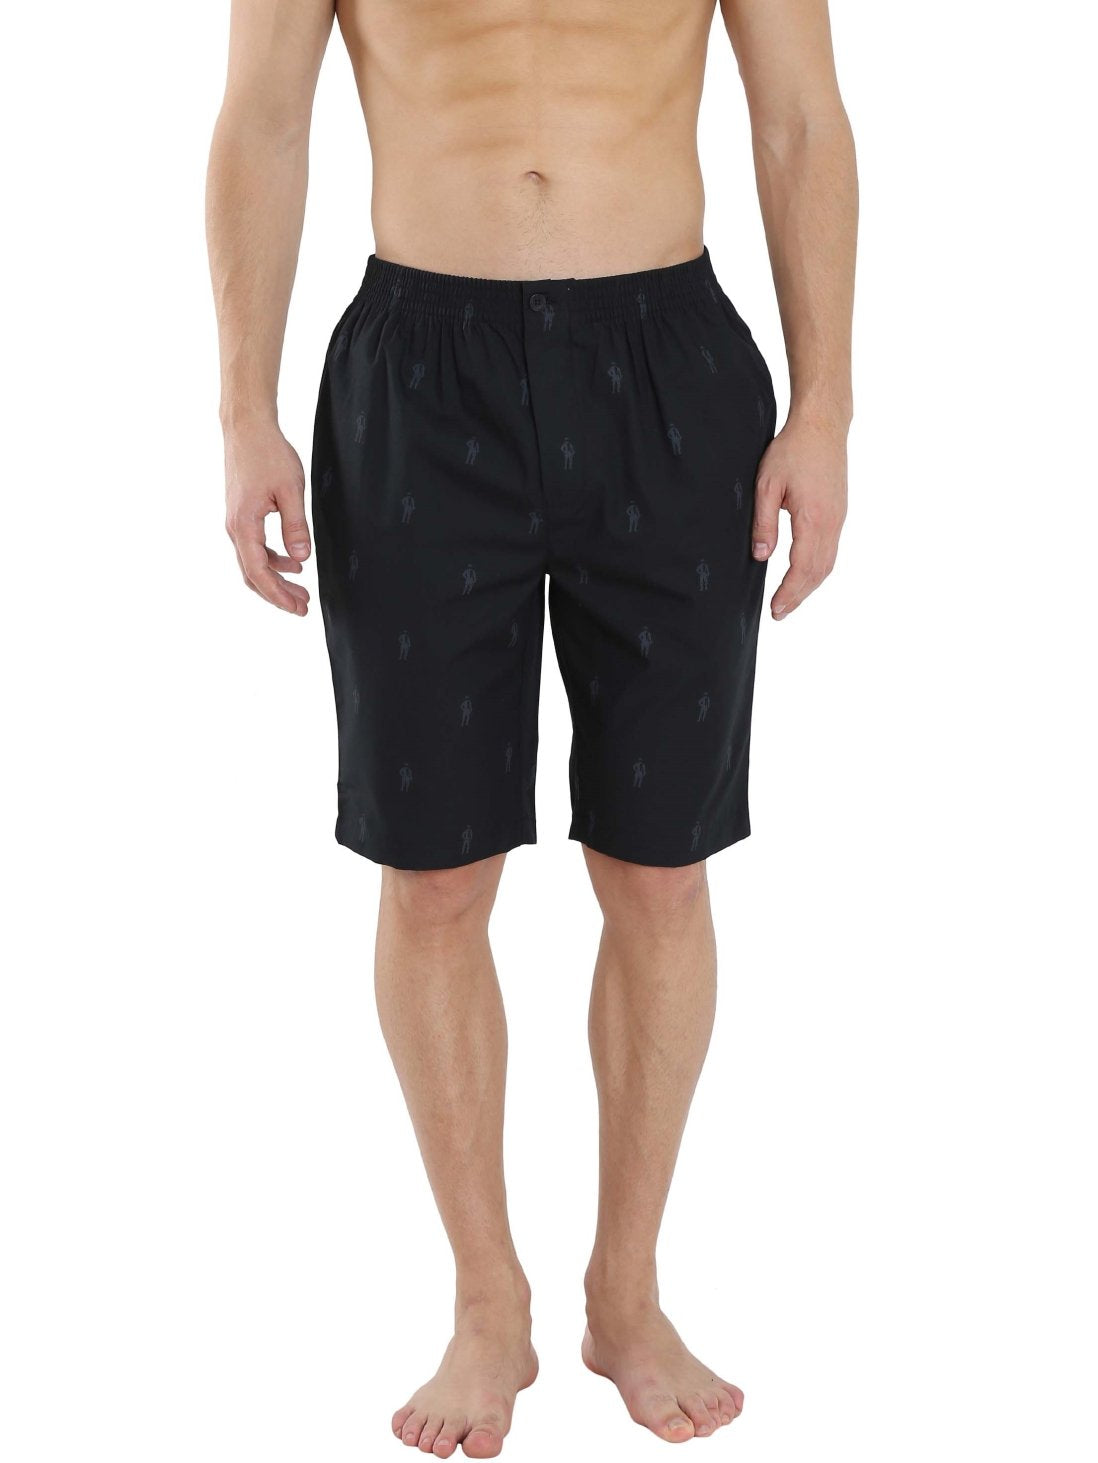 Jockey Men's Cotton Shorts (8901326151747_9005_X-Large_Black and Graphite)